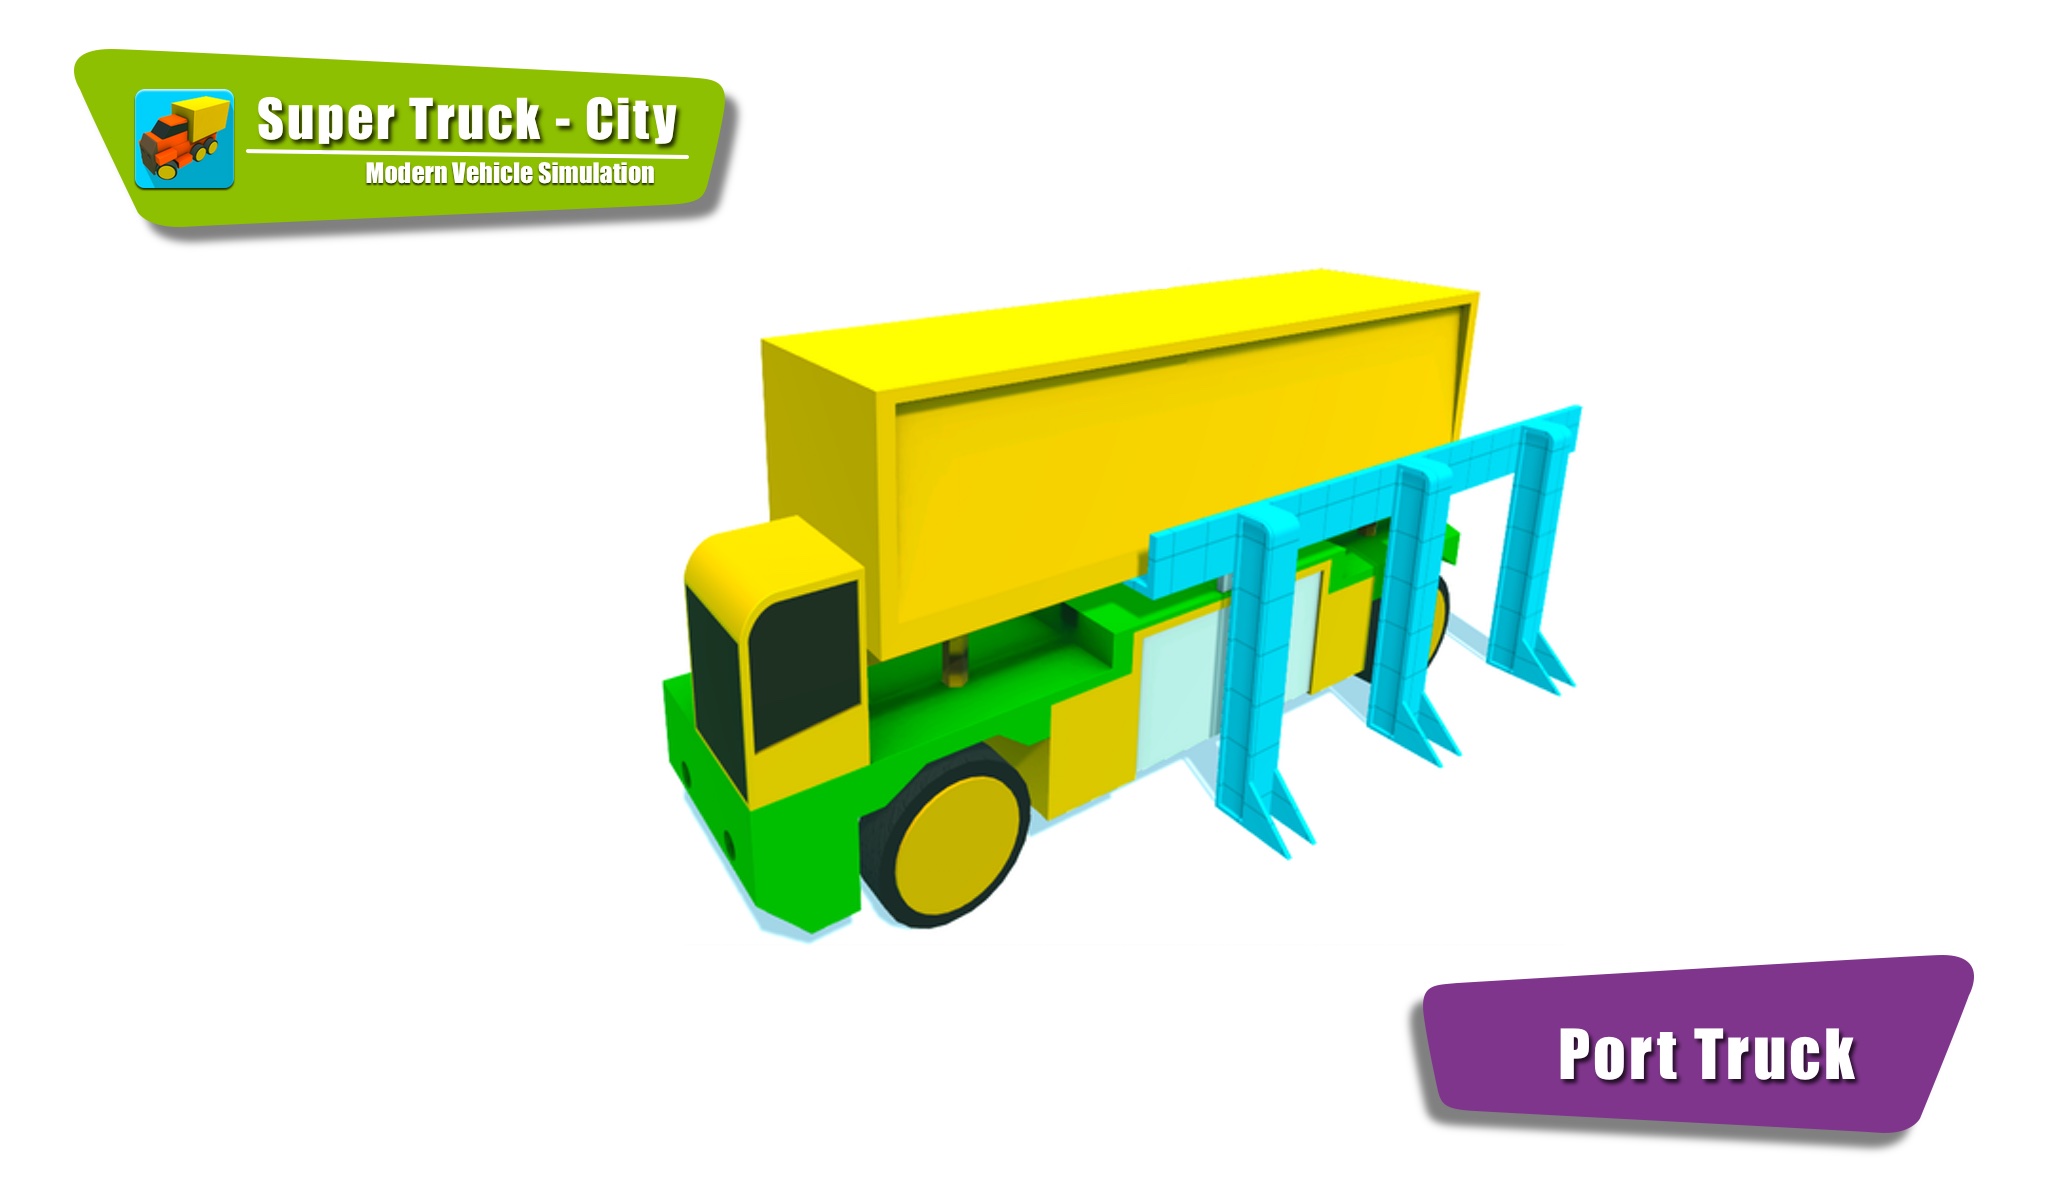 Port Truck